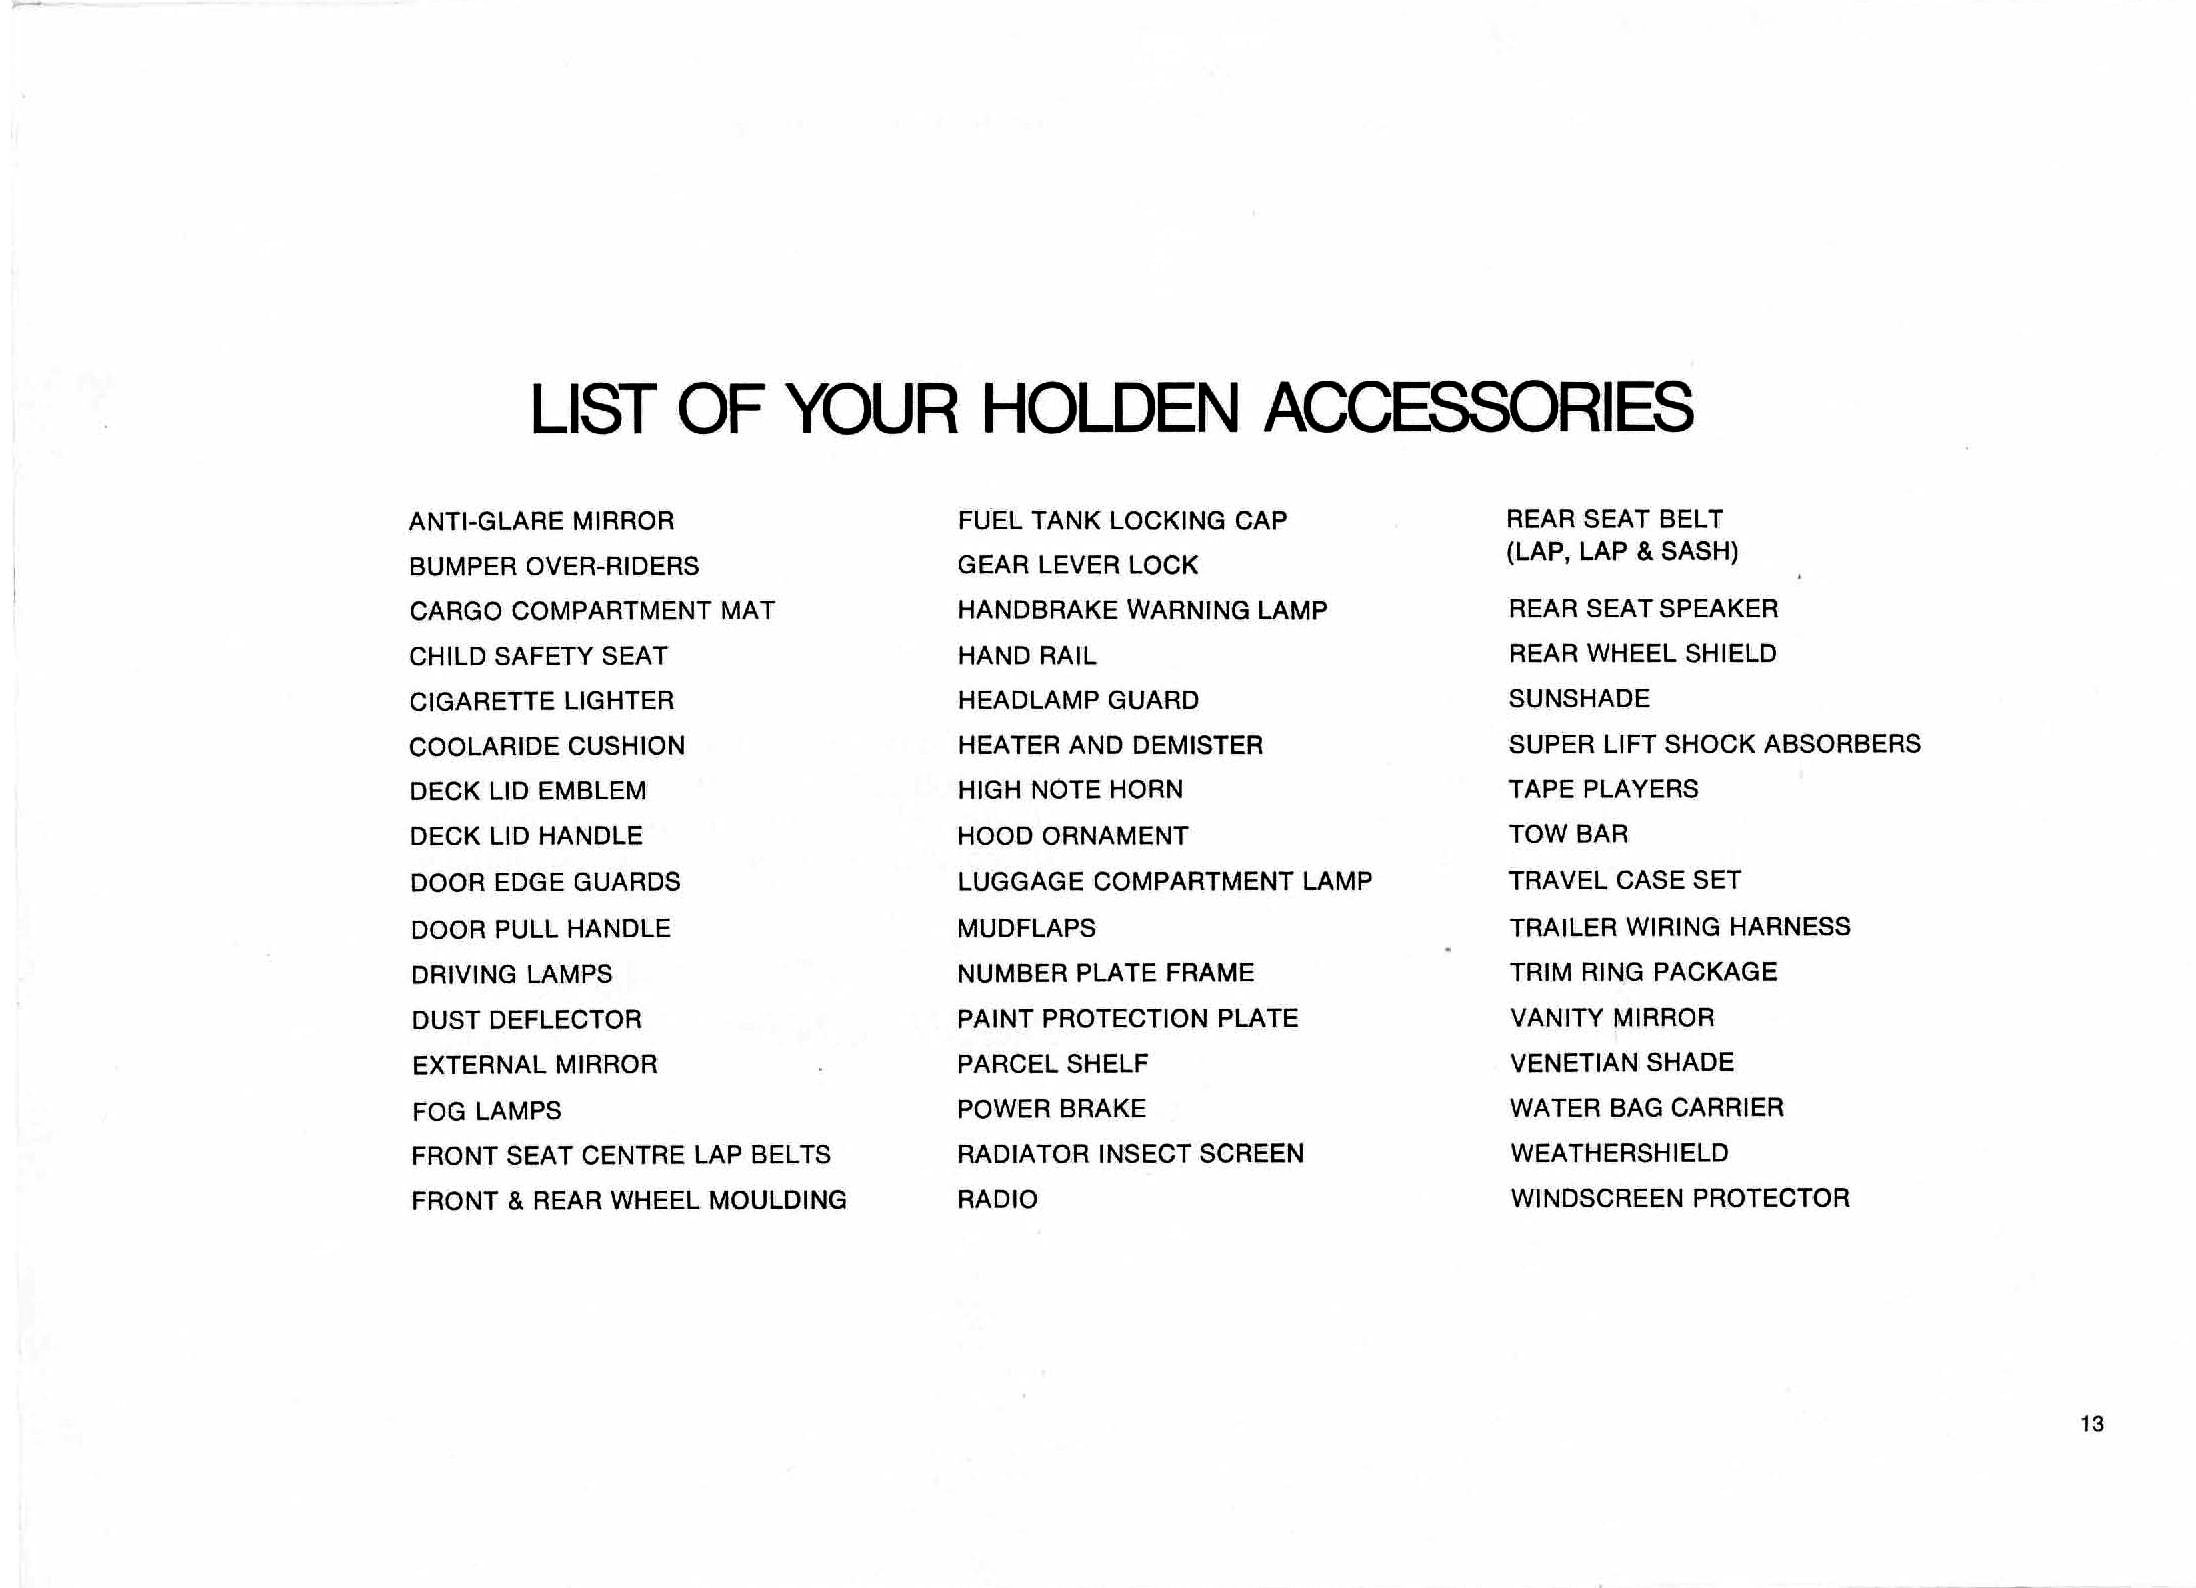 1969 Holden HT Accessories-13